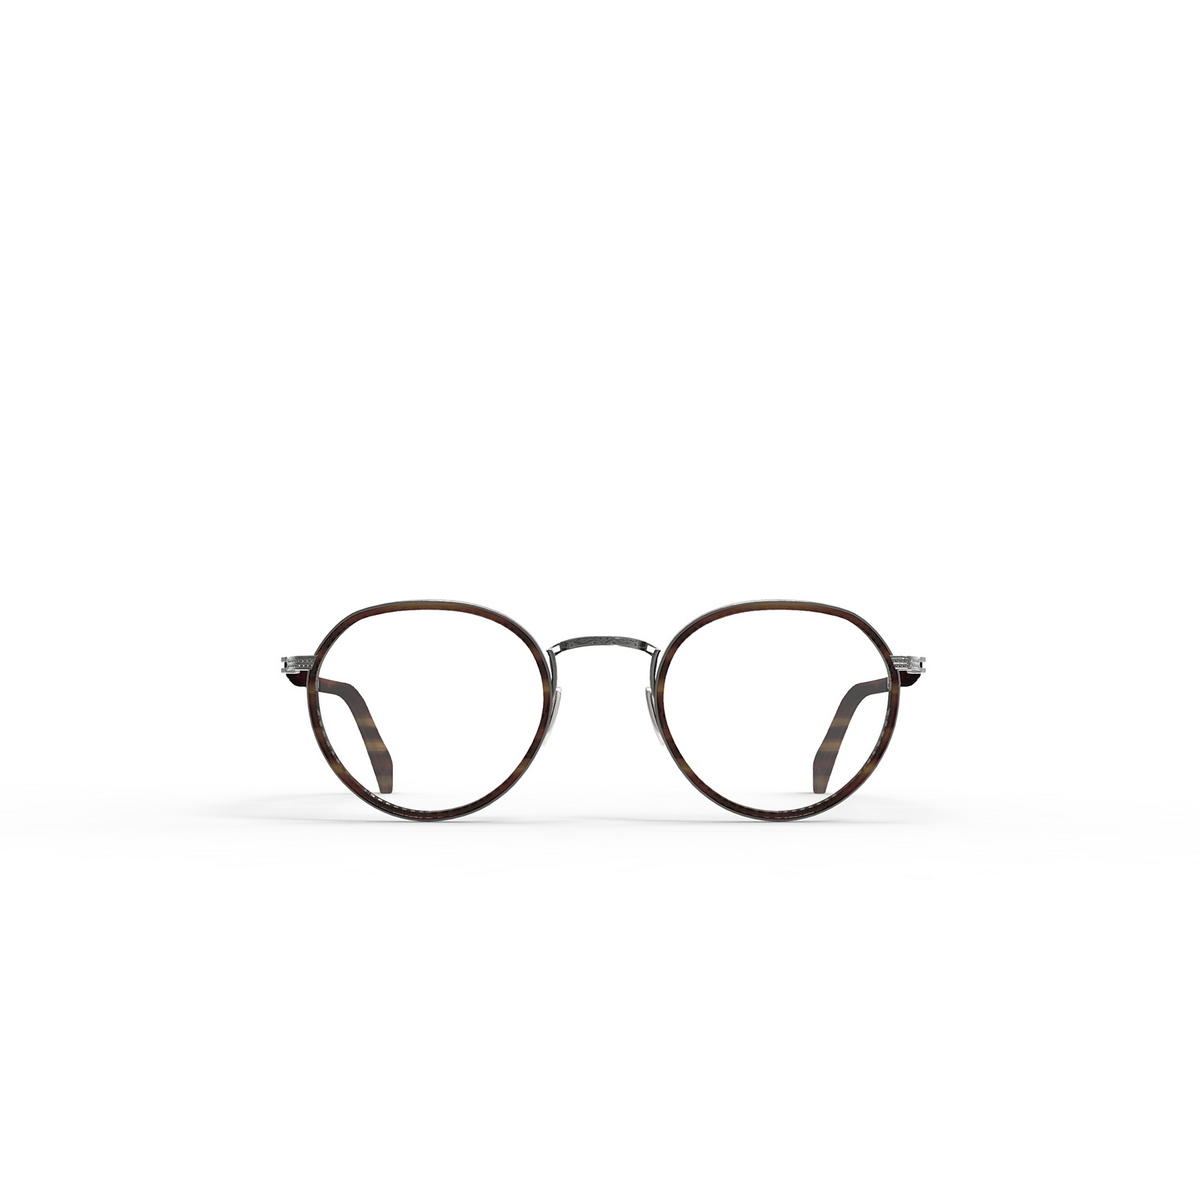 Mr. Leight BILLIE C Eyeglasses DRFTWD-PW Driftwood-Pewter - front view